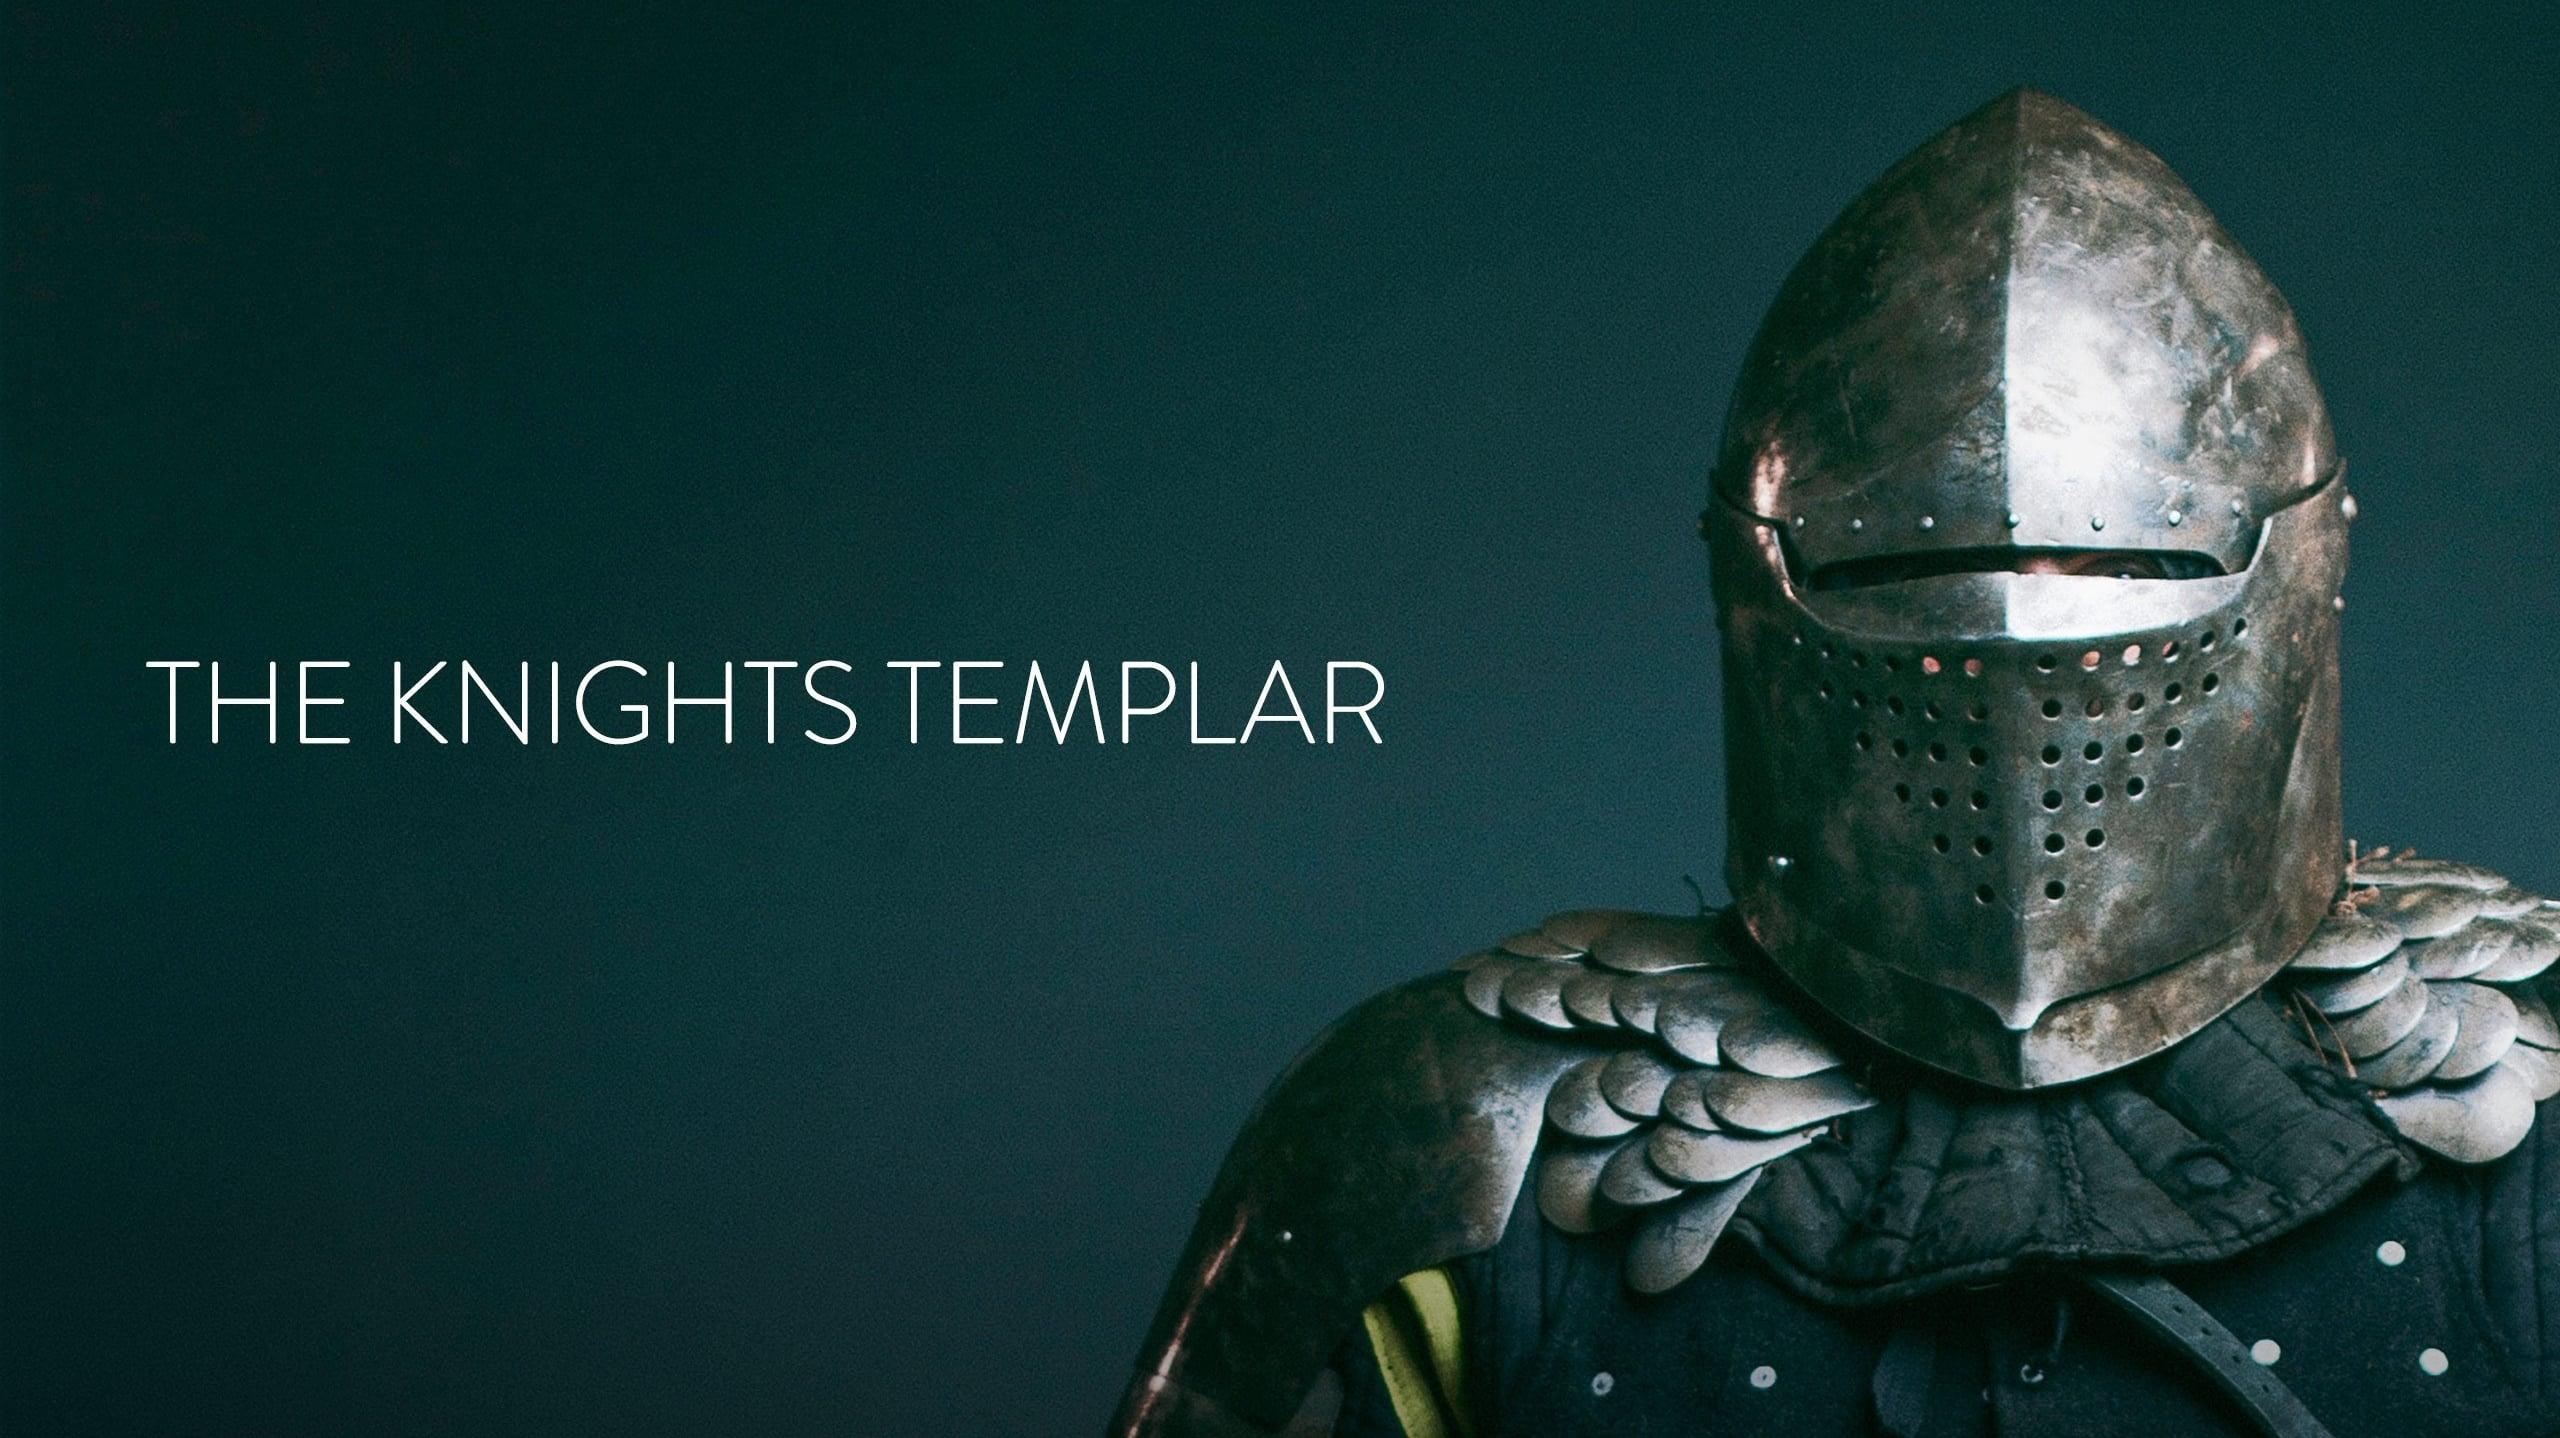 The Knights Templar backdrop